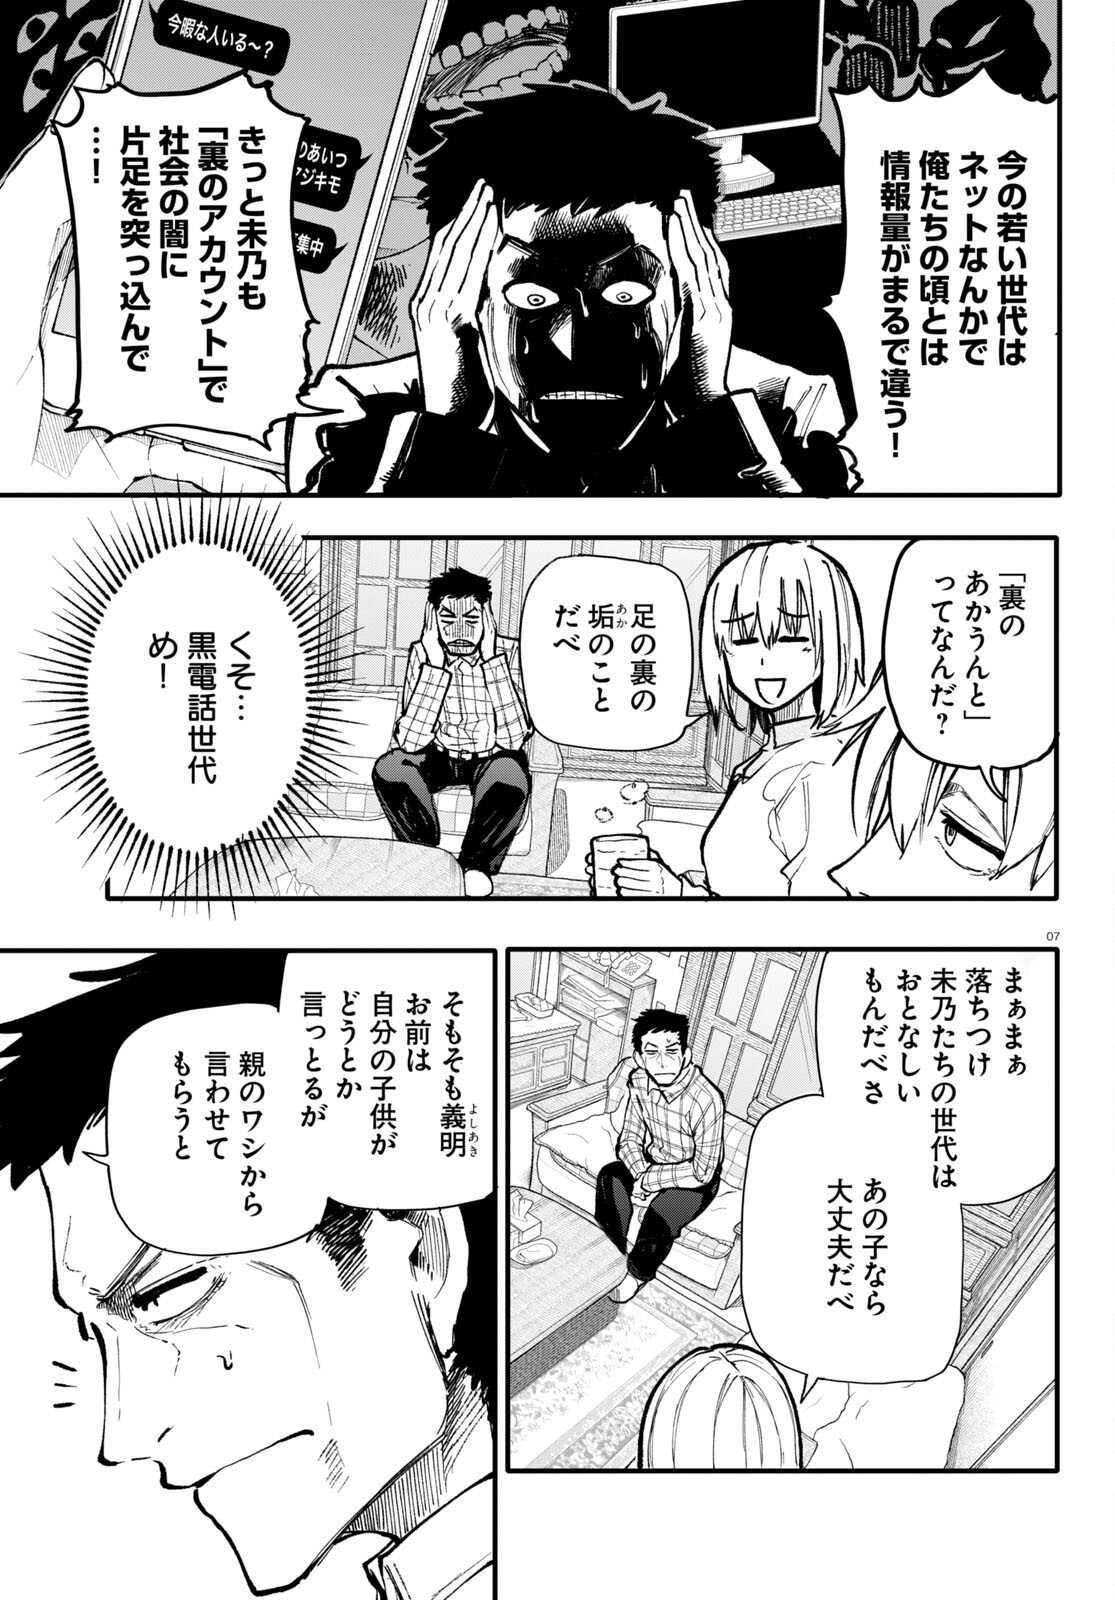 Ojii-san to Obaa-san ga Wakigaetta Hanashi - Chapter 129 - Page 3